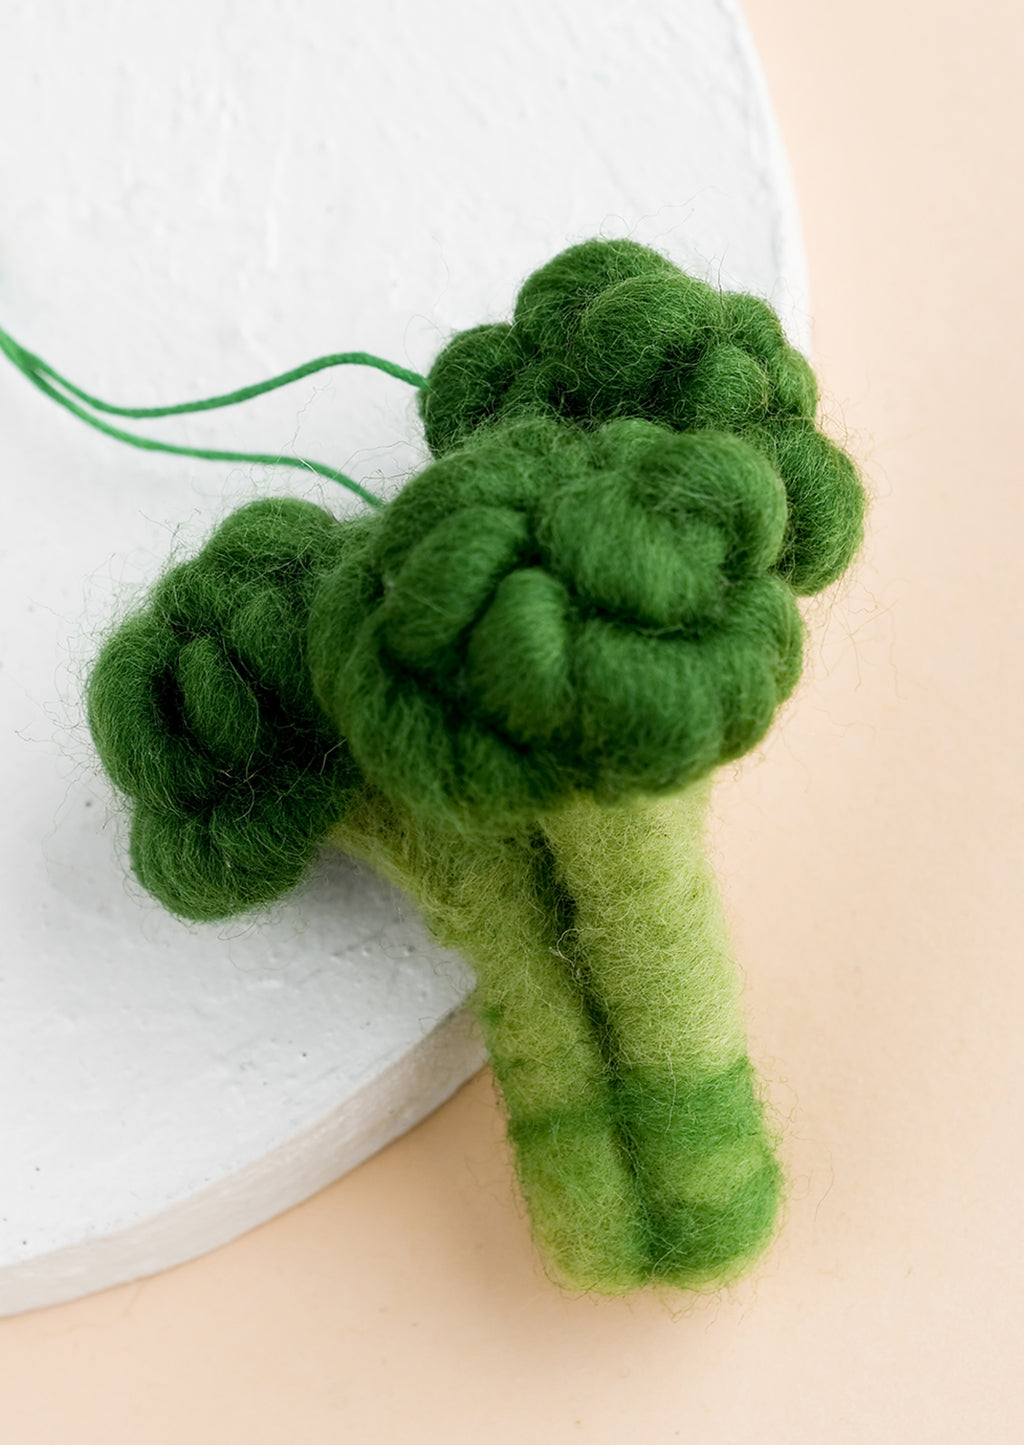 Broccoli: A felted ornament of broccoli.